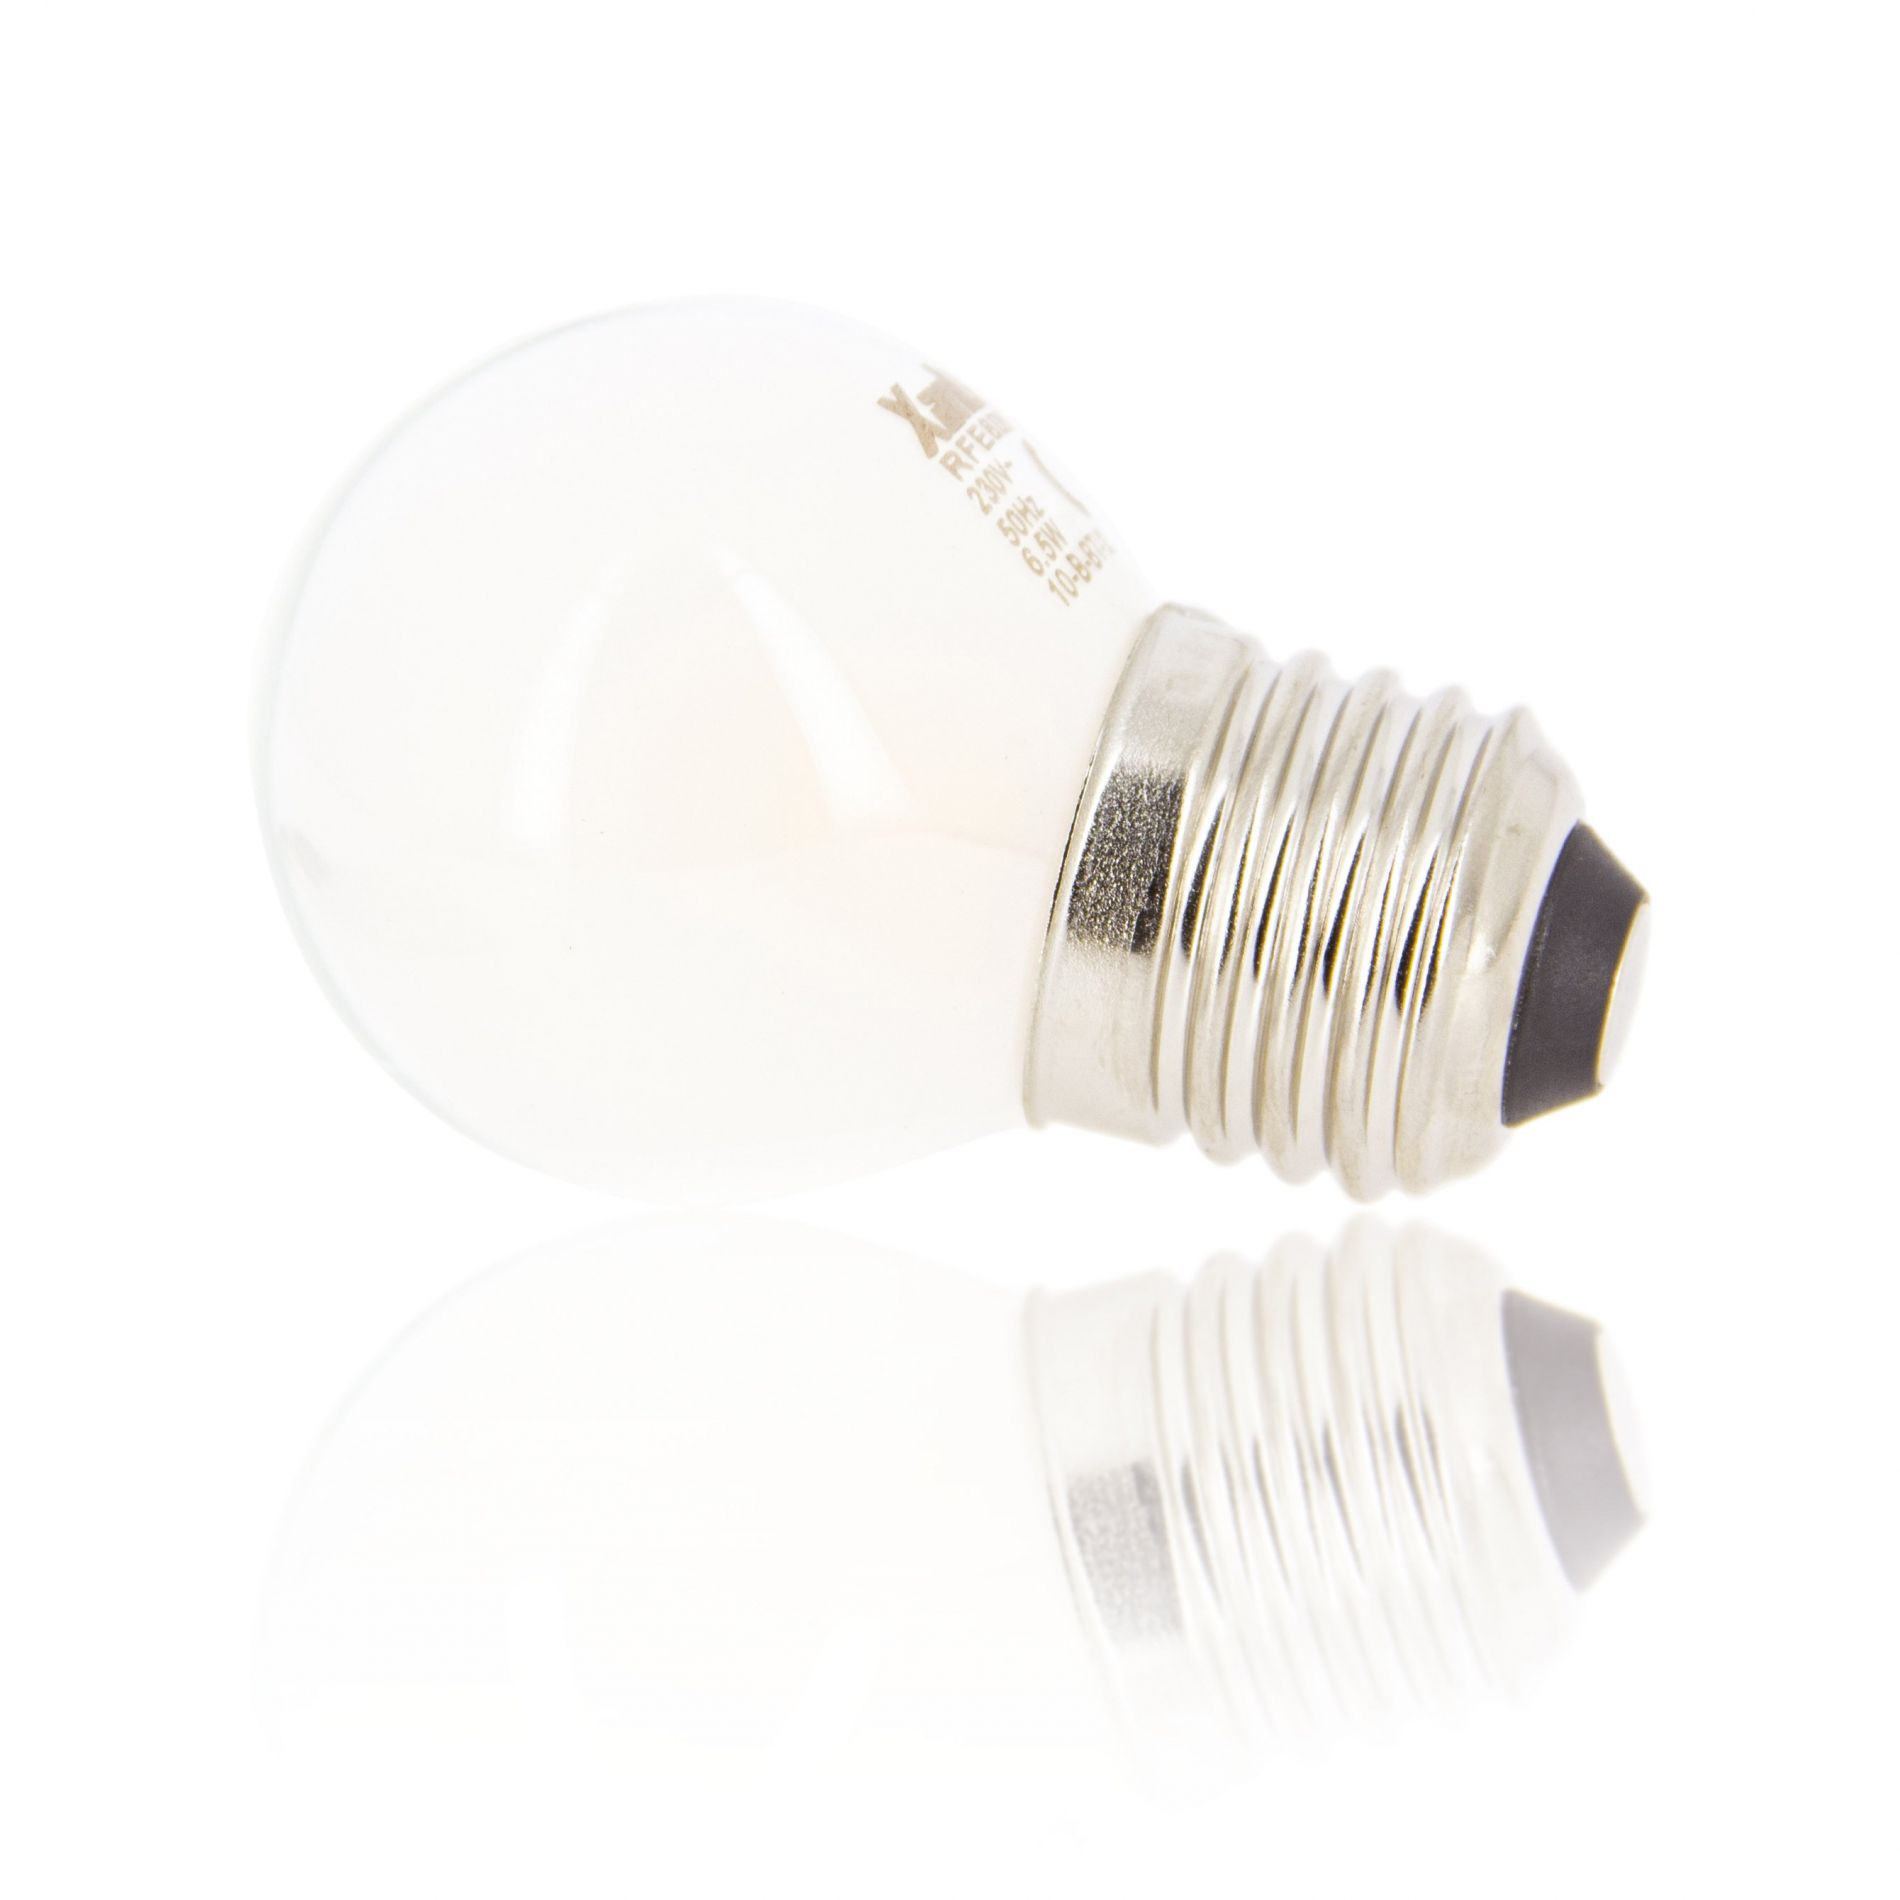 Ampoule Led programmable Memo-K E27 806 lumens 10W type de blanc